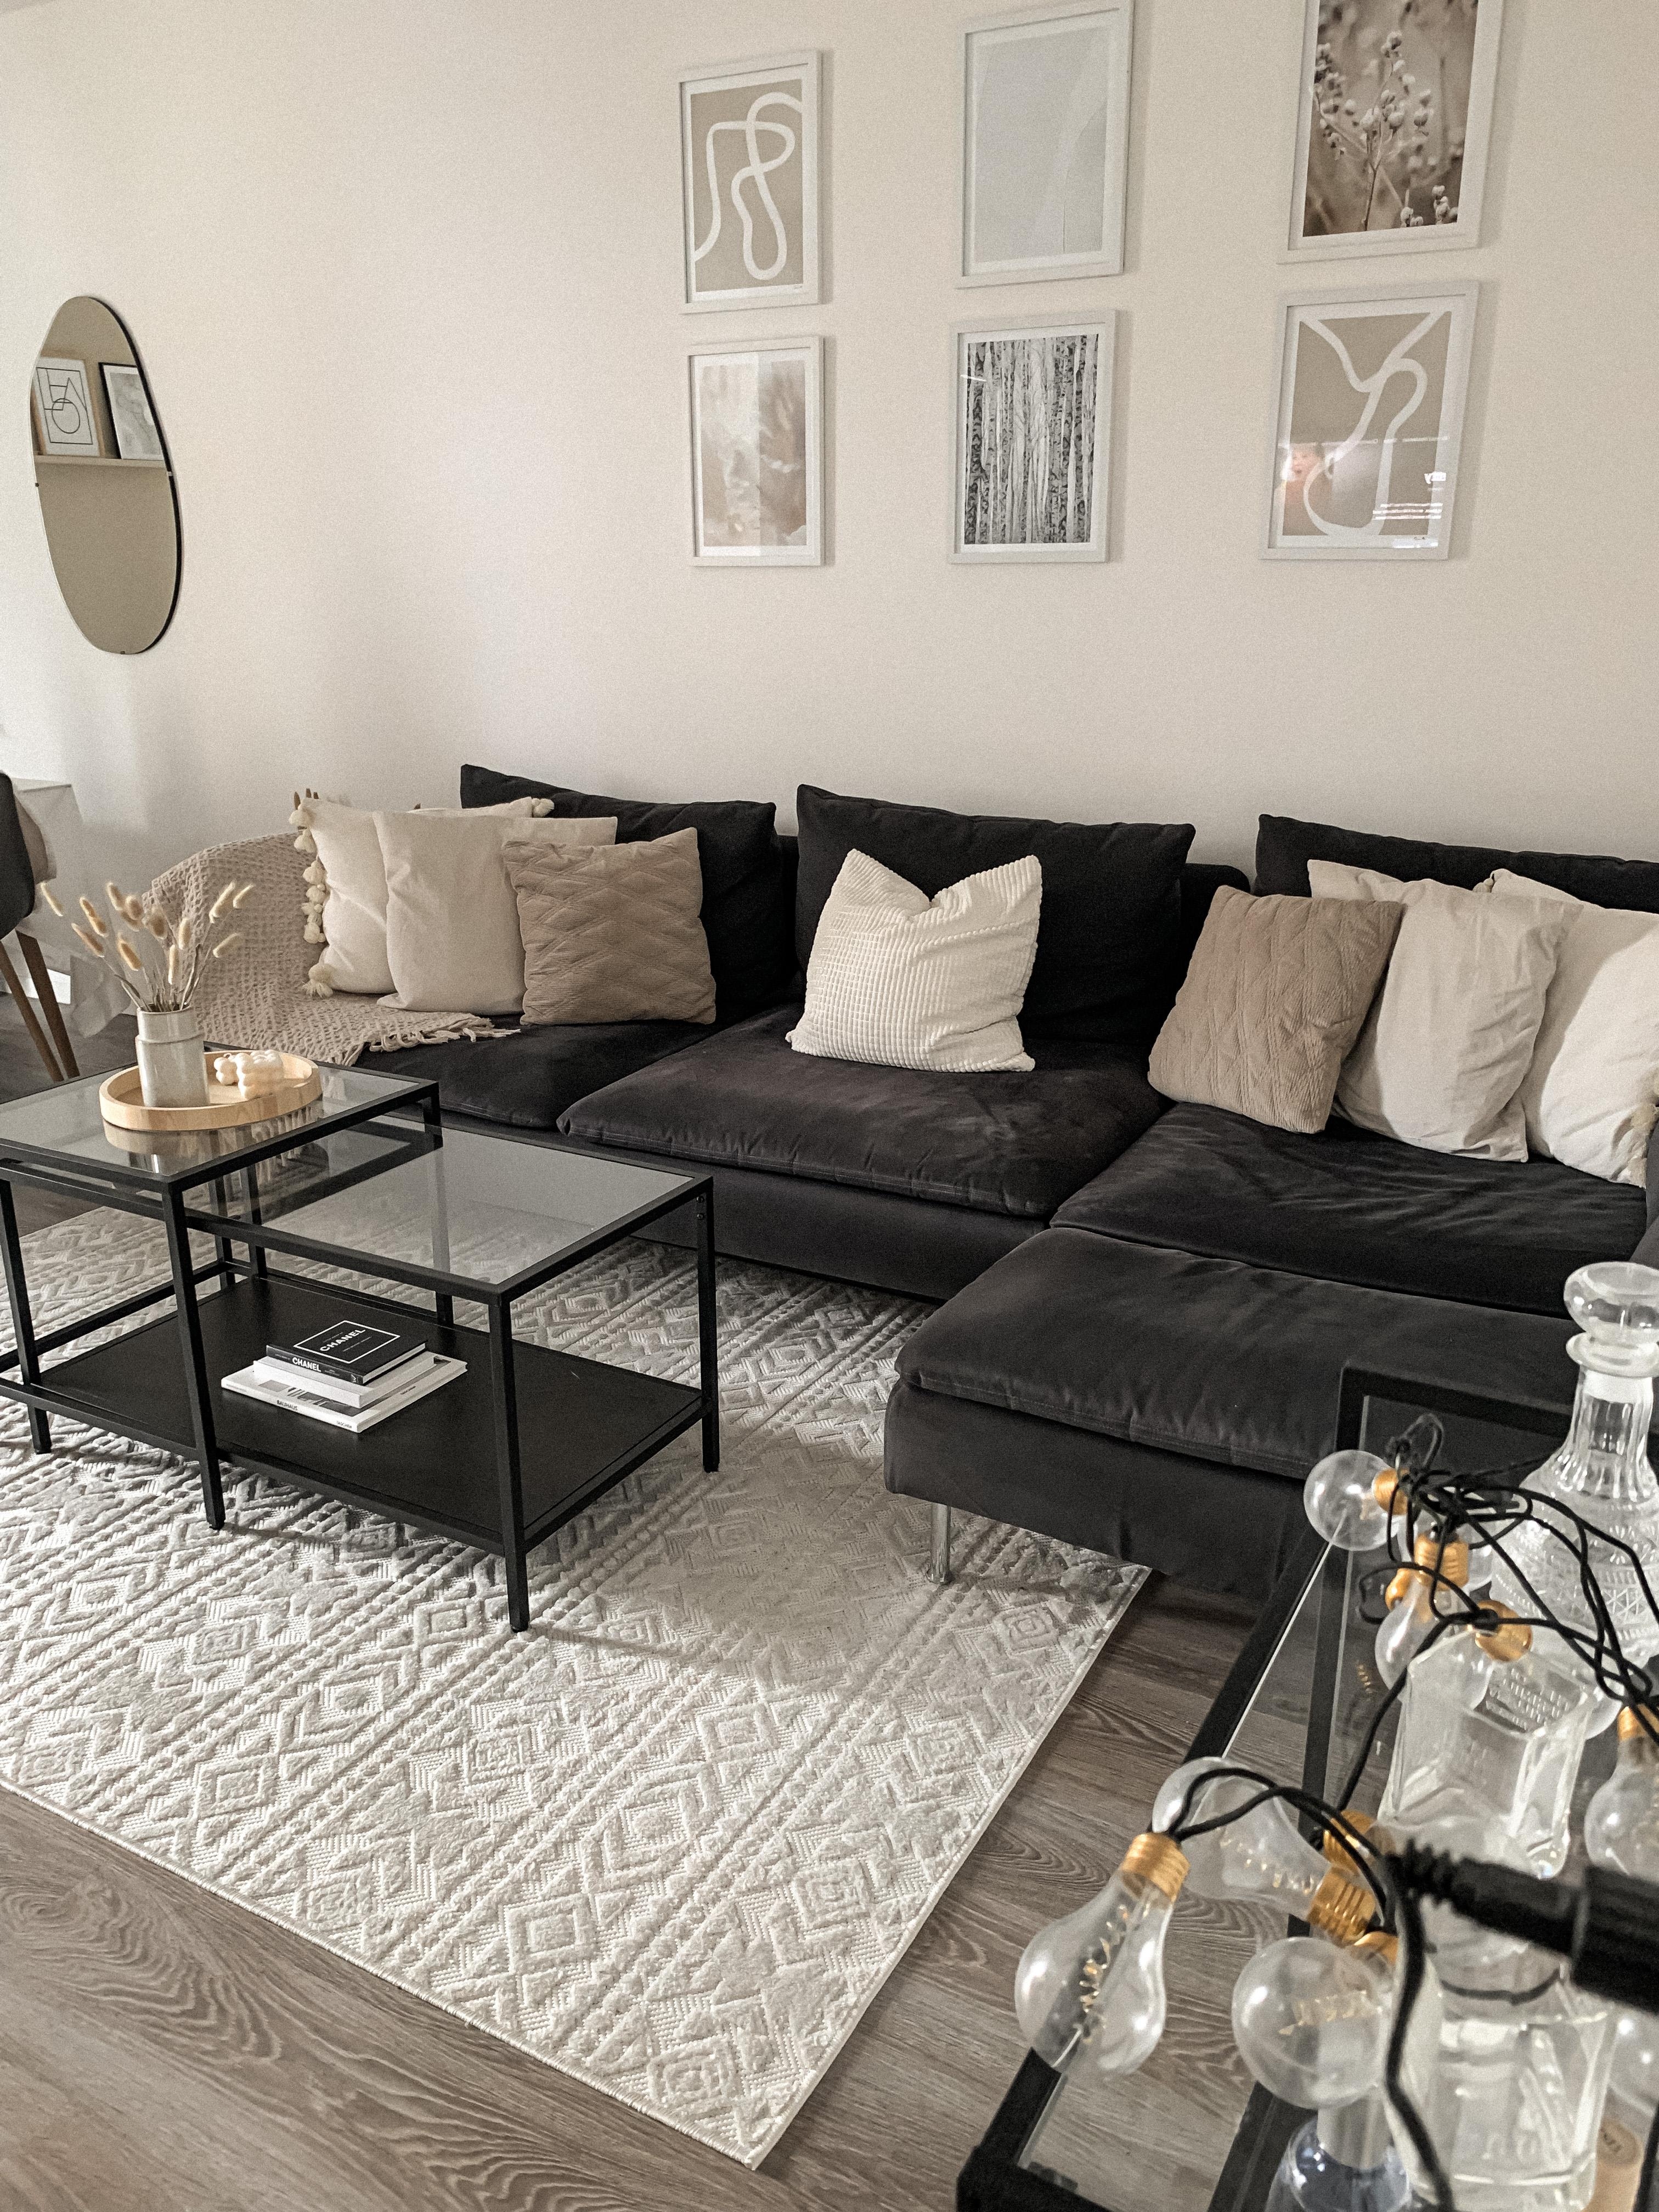 #couchstyle #couchmagazin #home #cozy #interior 